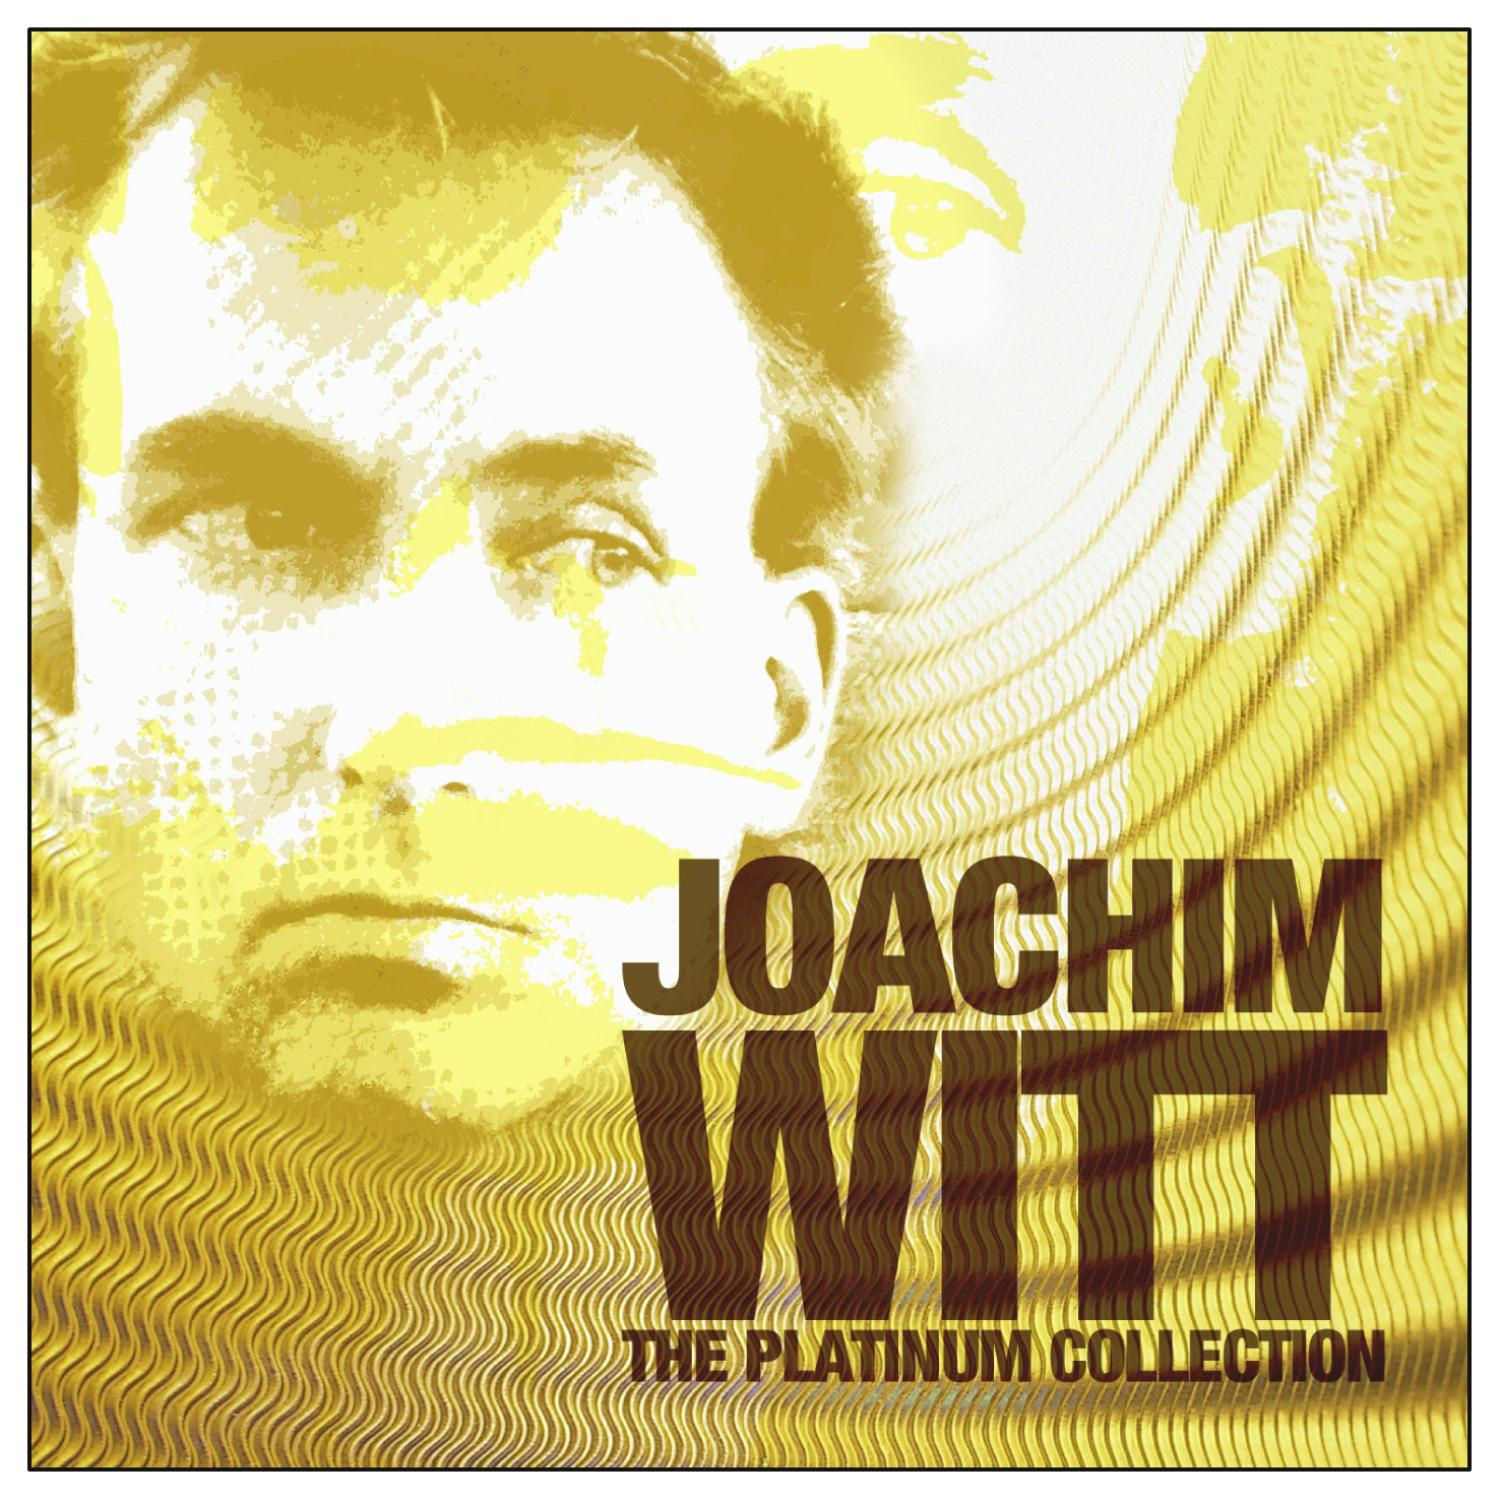 - - Joachim Witt The Collection (CD) Platinum